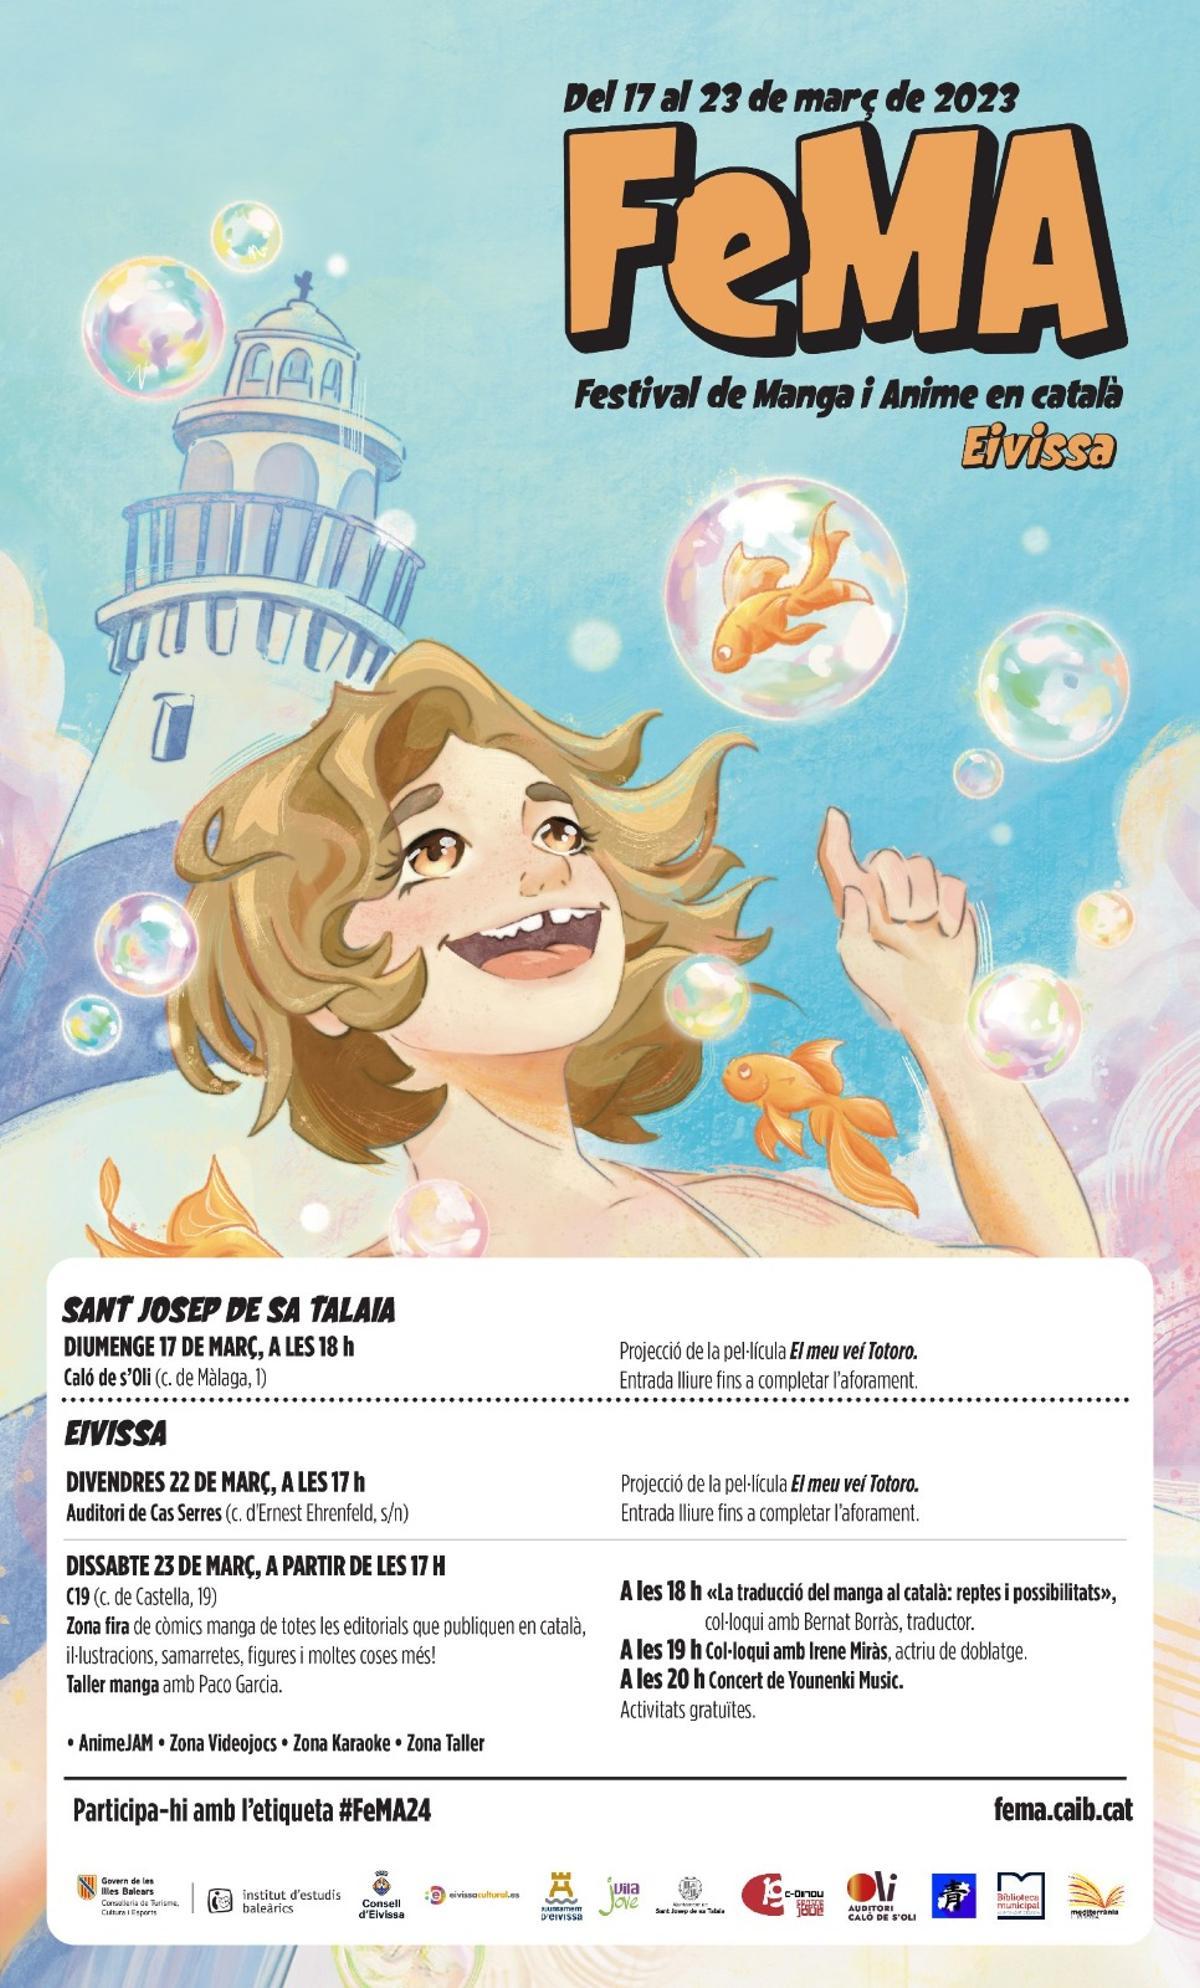 Program Of The 'Festival De Manga I Anime En Català' In Ibiza